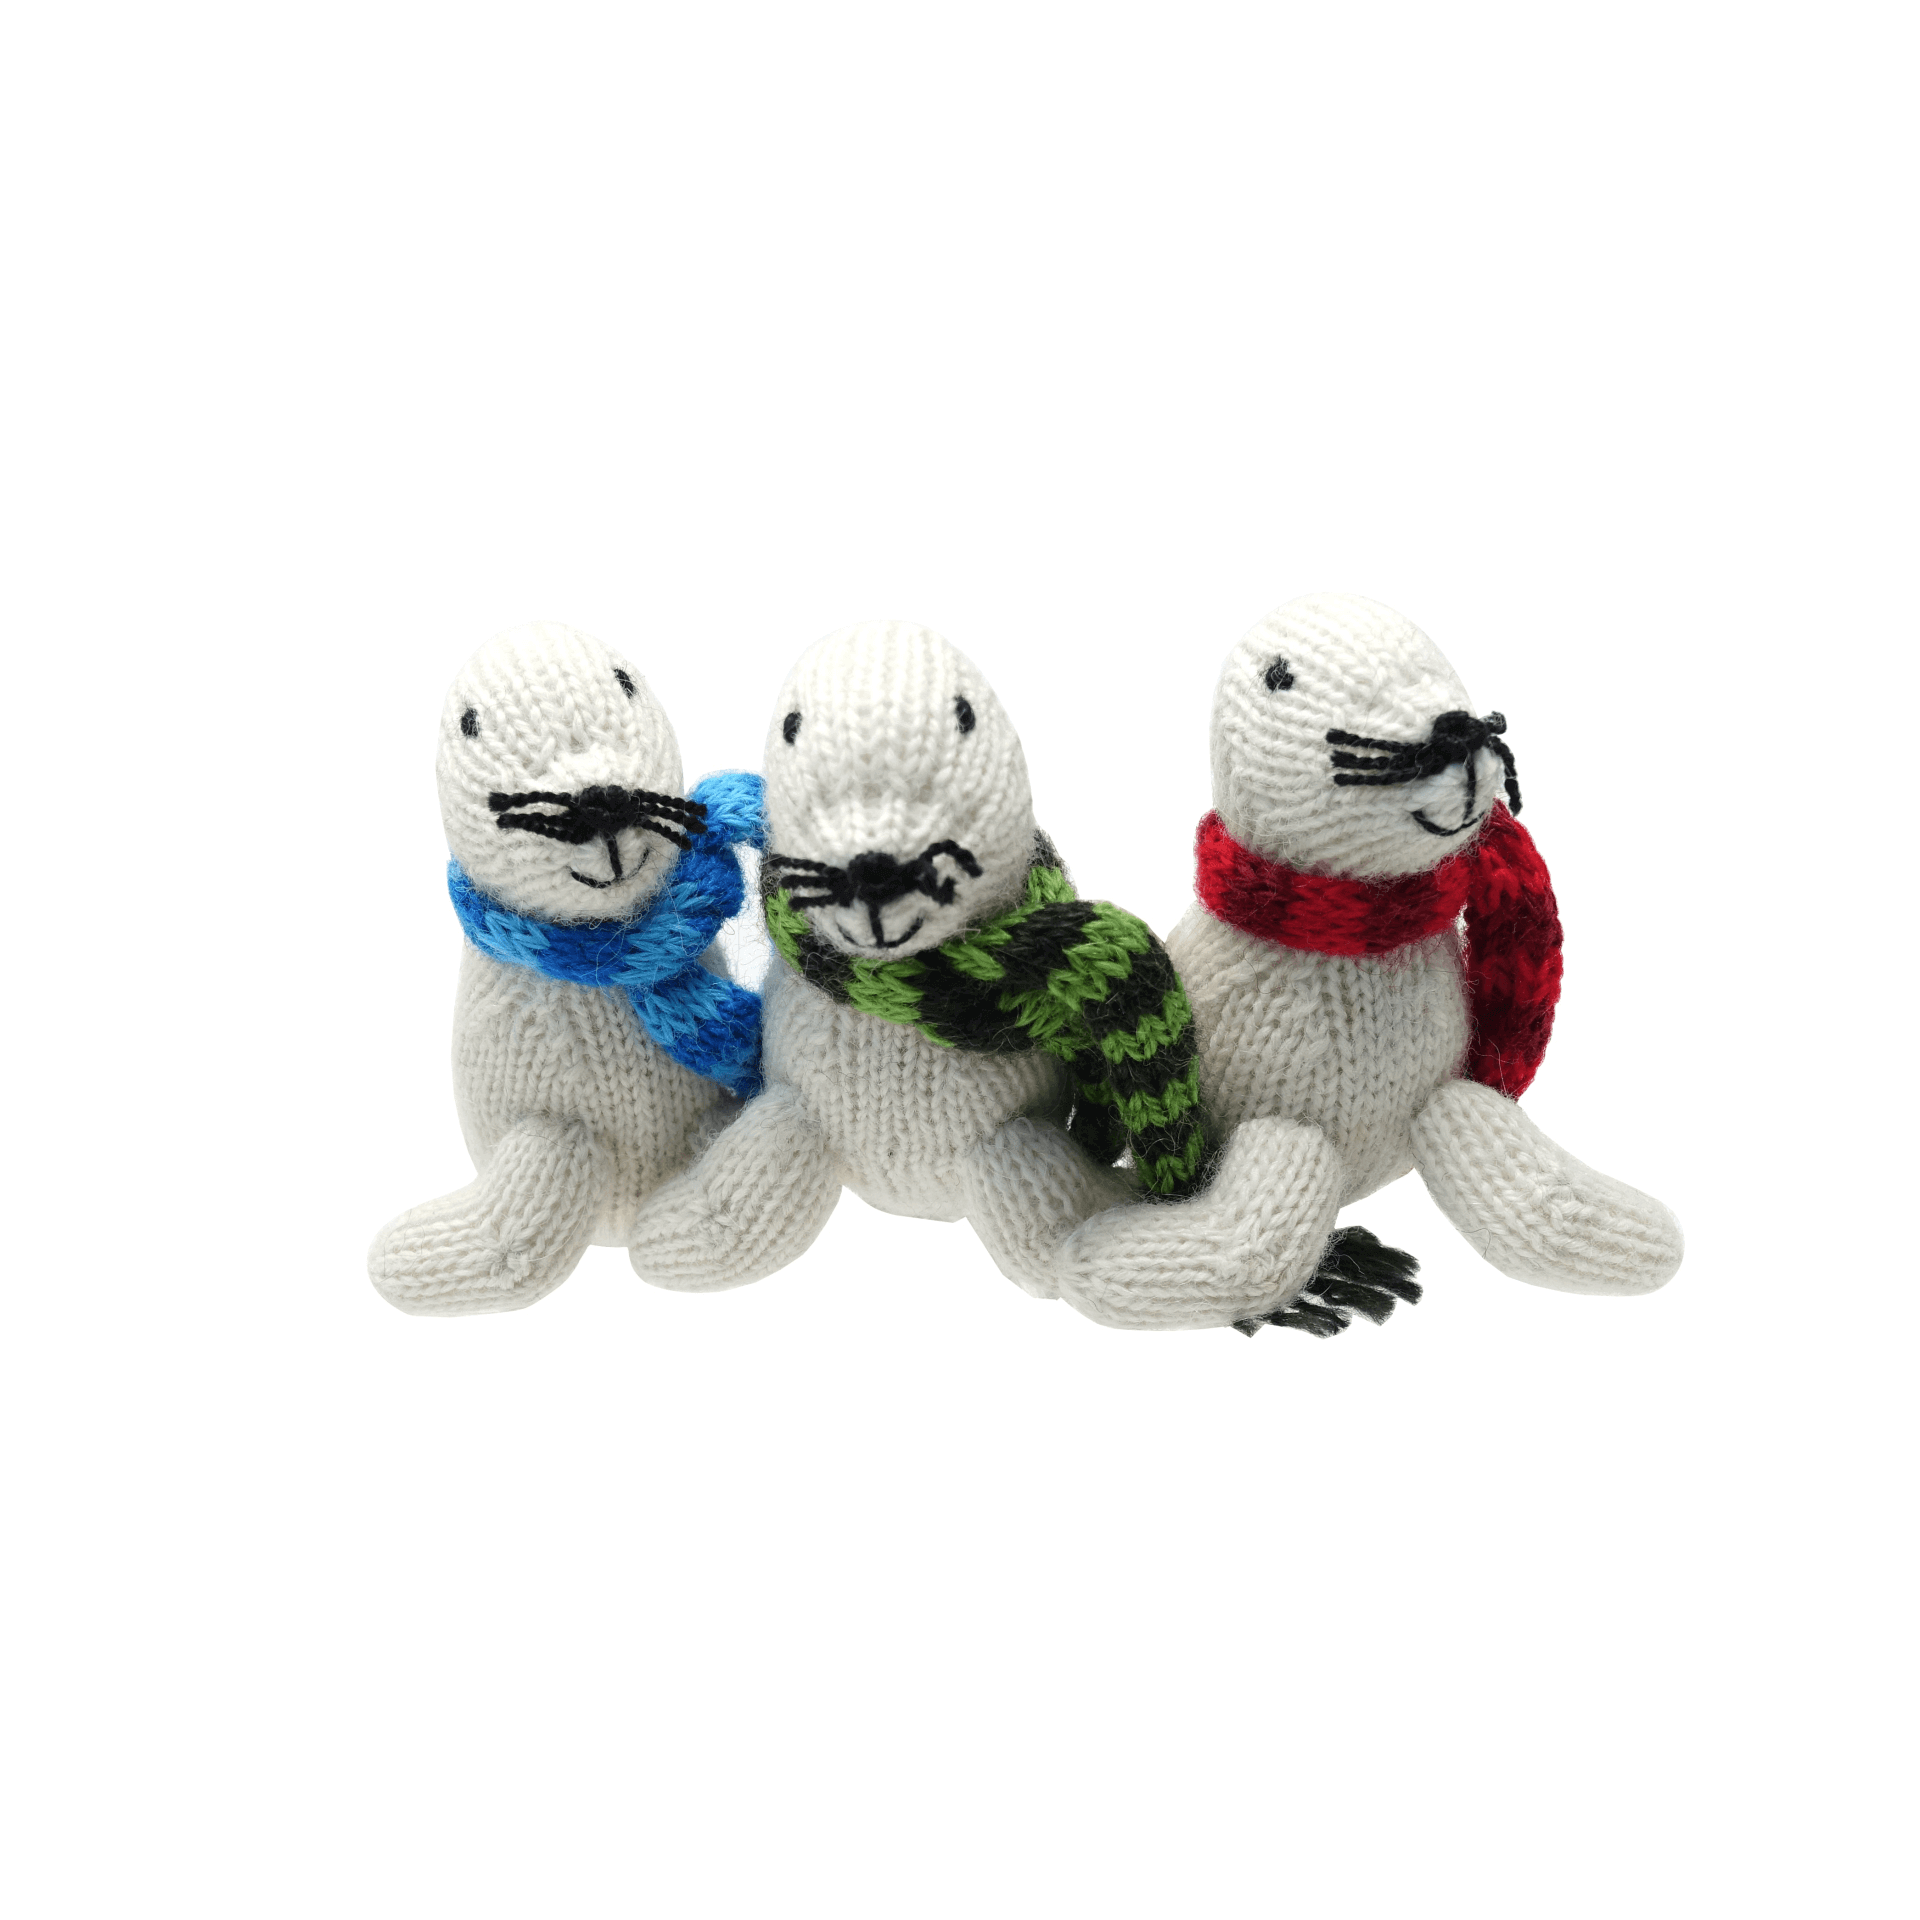 White Seal Handmade Artisan Knit Ornaments - set of 3